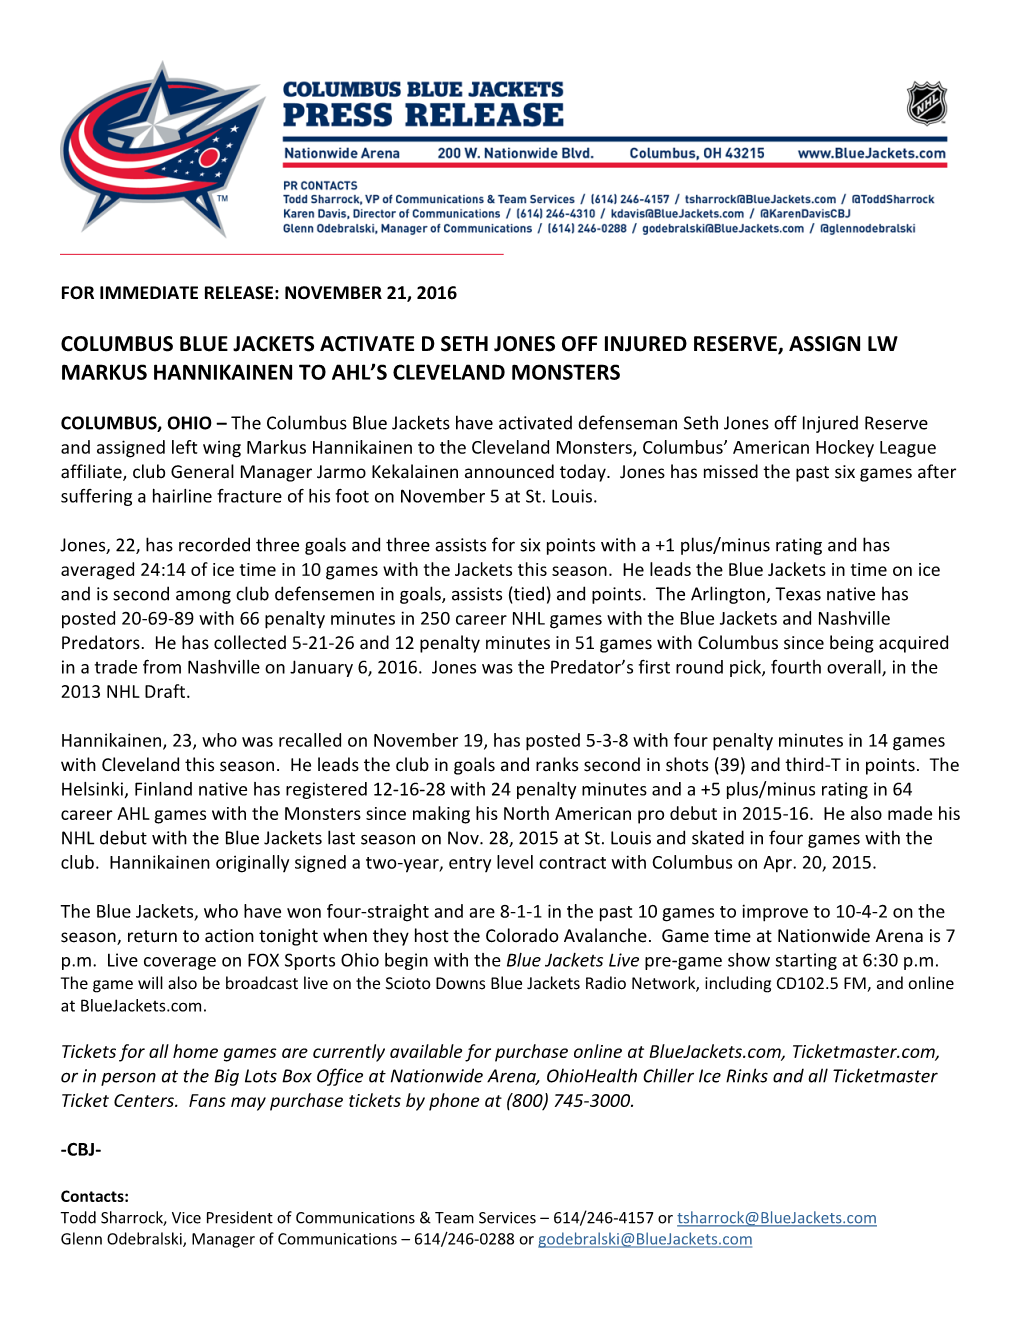 Columbus Blue Jackets Activate D Seth Jones Off Injured Reserve, Assign Lw Markus Hannikainen to Ahl’S Cleveland Monsters